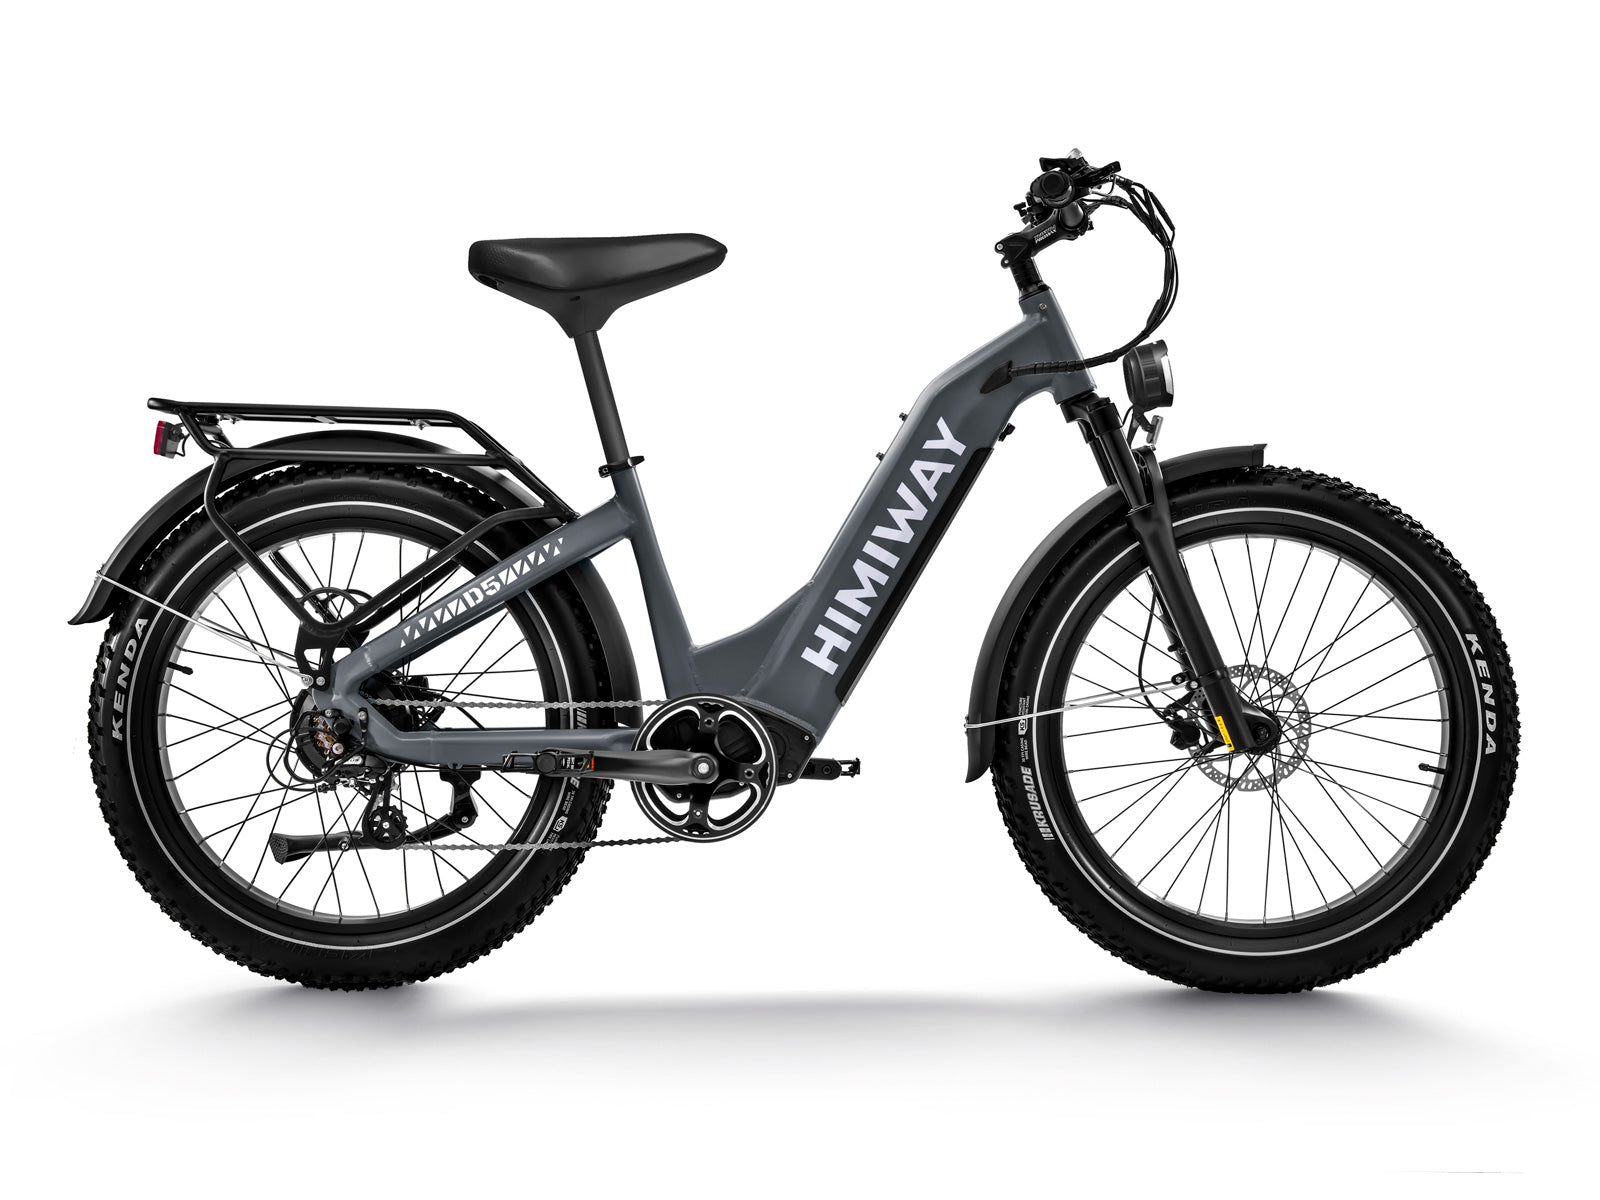 Himiway Zebra ST | D5 ST | Premium All-terrain Electric Fat Bike